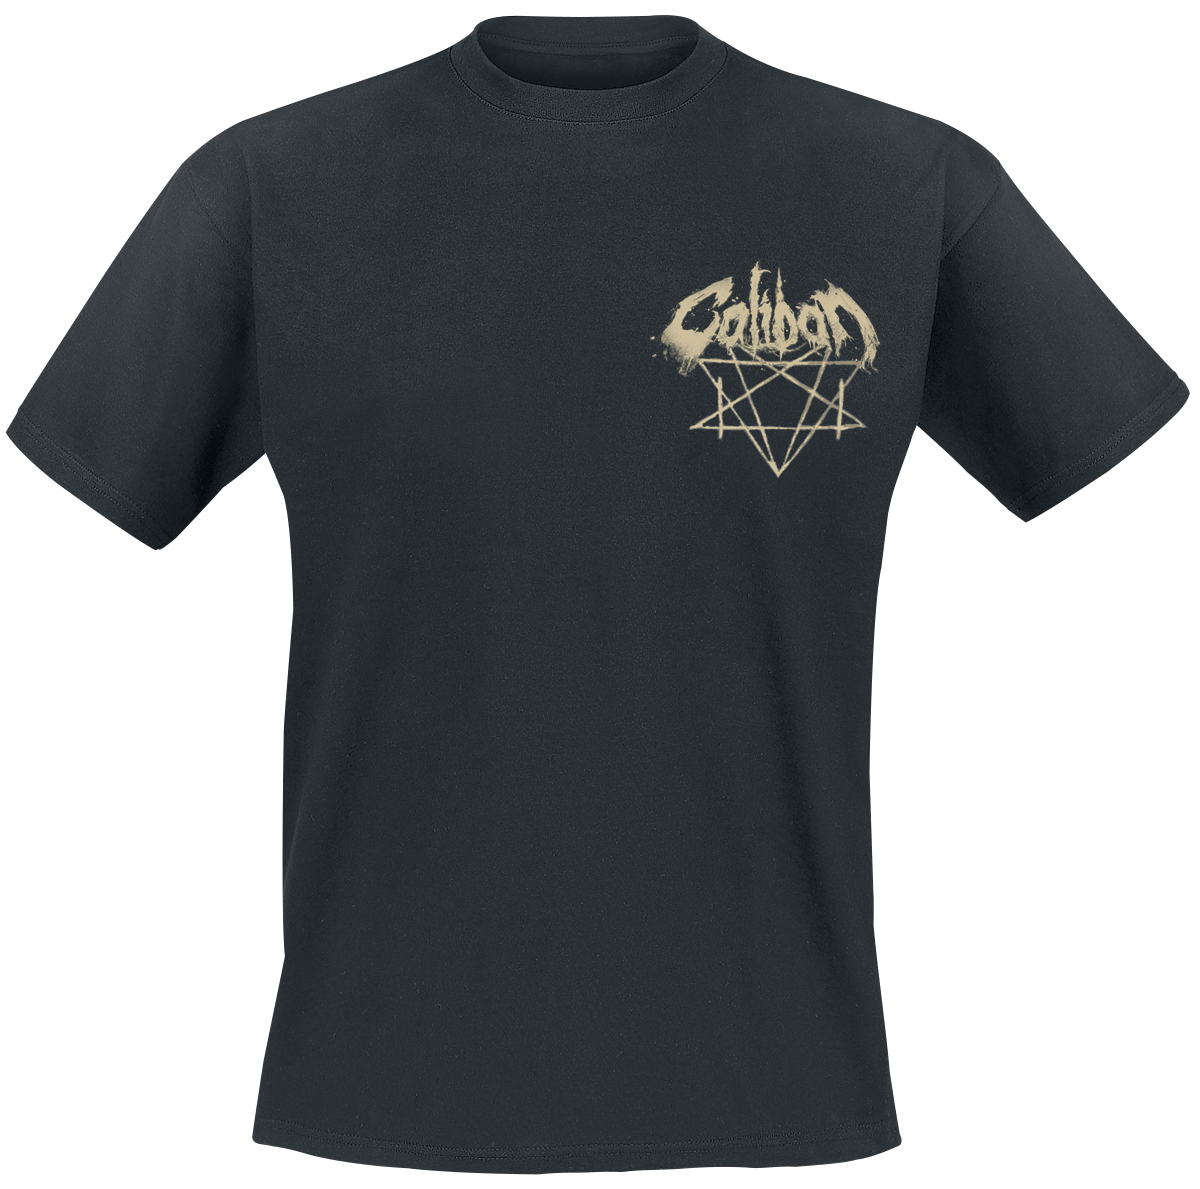 Caliban - Shrine - T-Shirt - black image